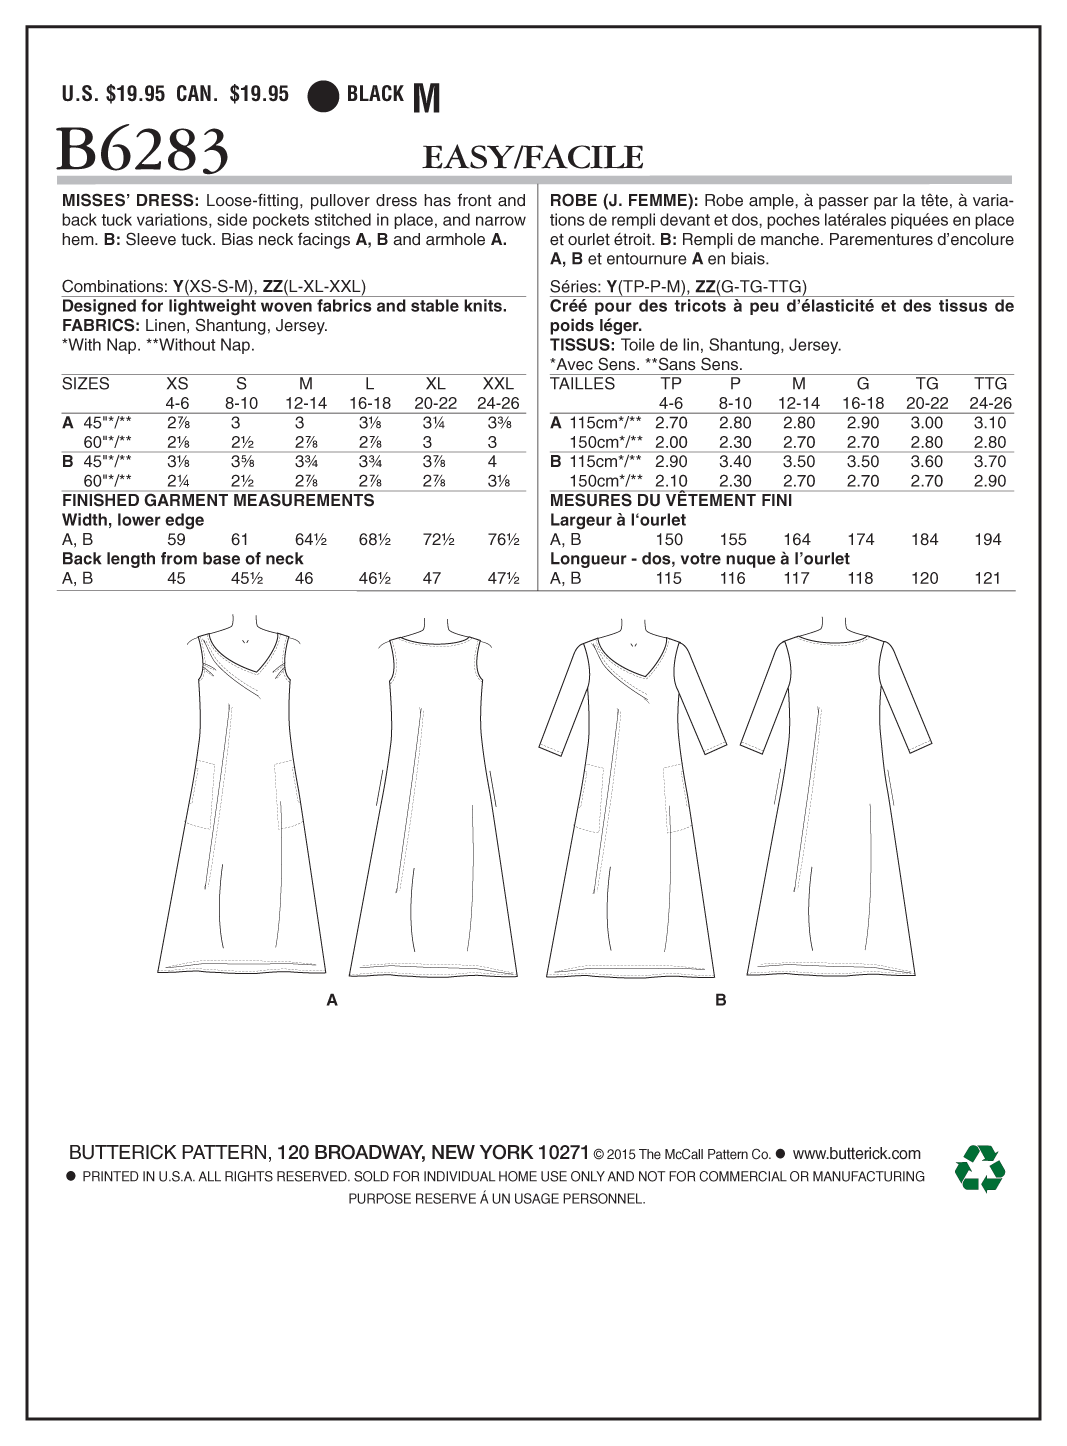 Butterick Sewing Pattern B6283 Misses' Dress